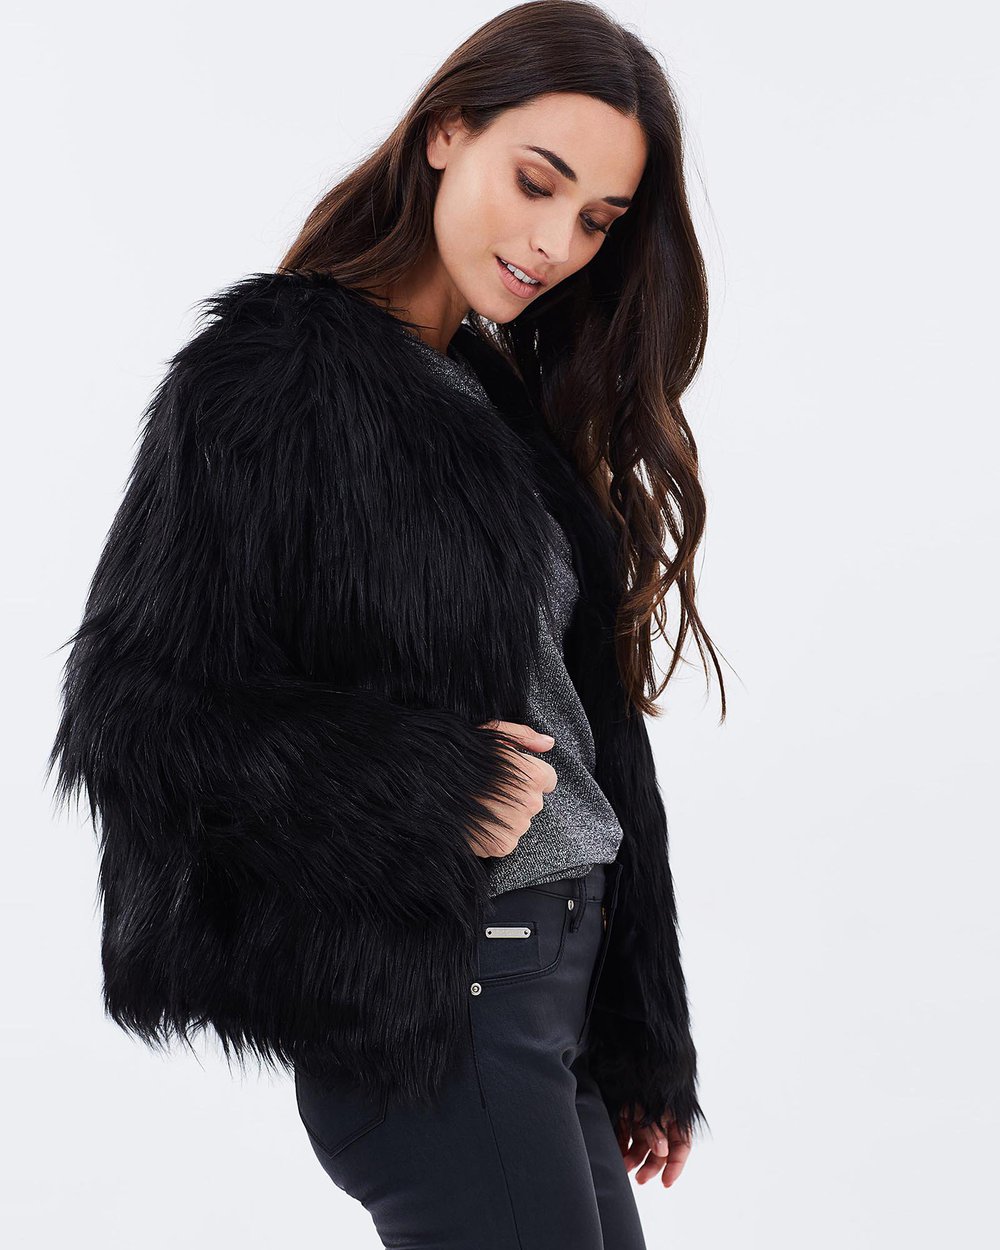 Unreal Dream Fur Jacket - Black - Get Dressed Hire